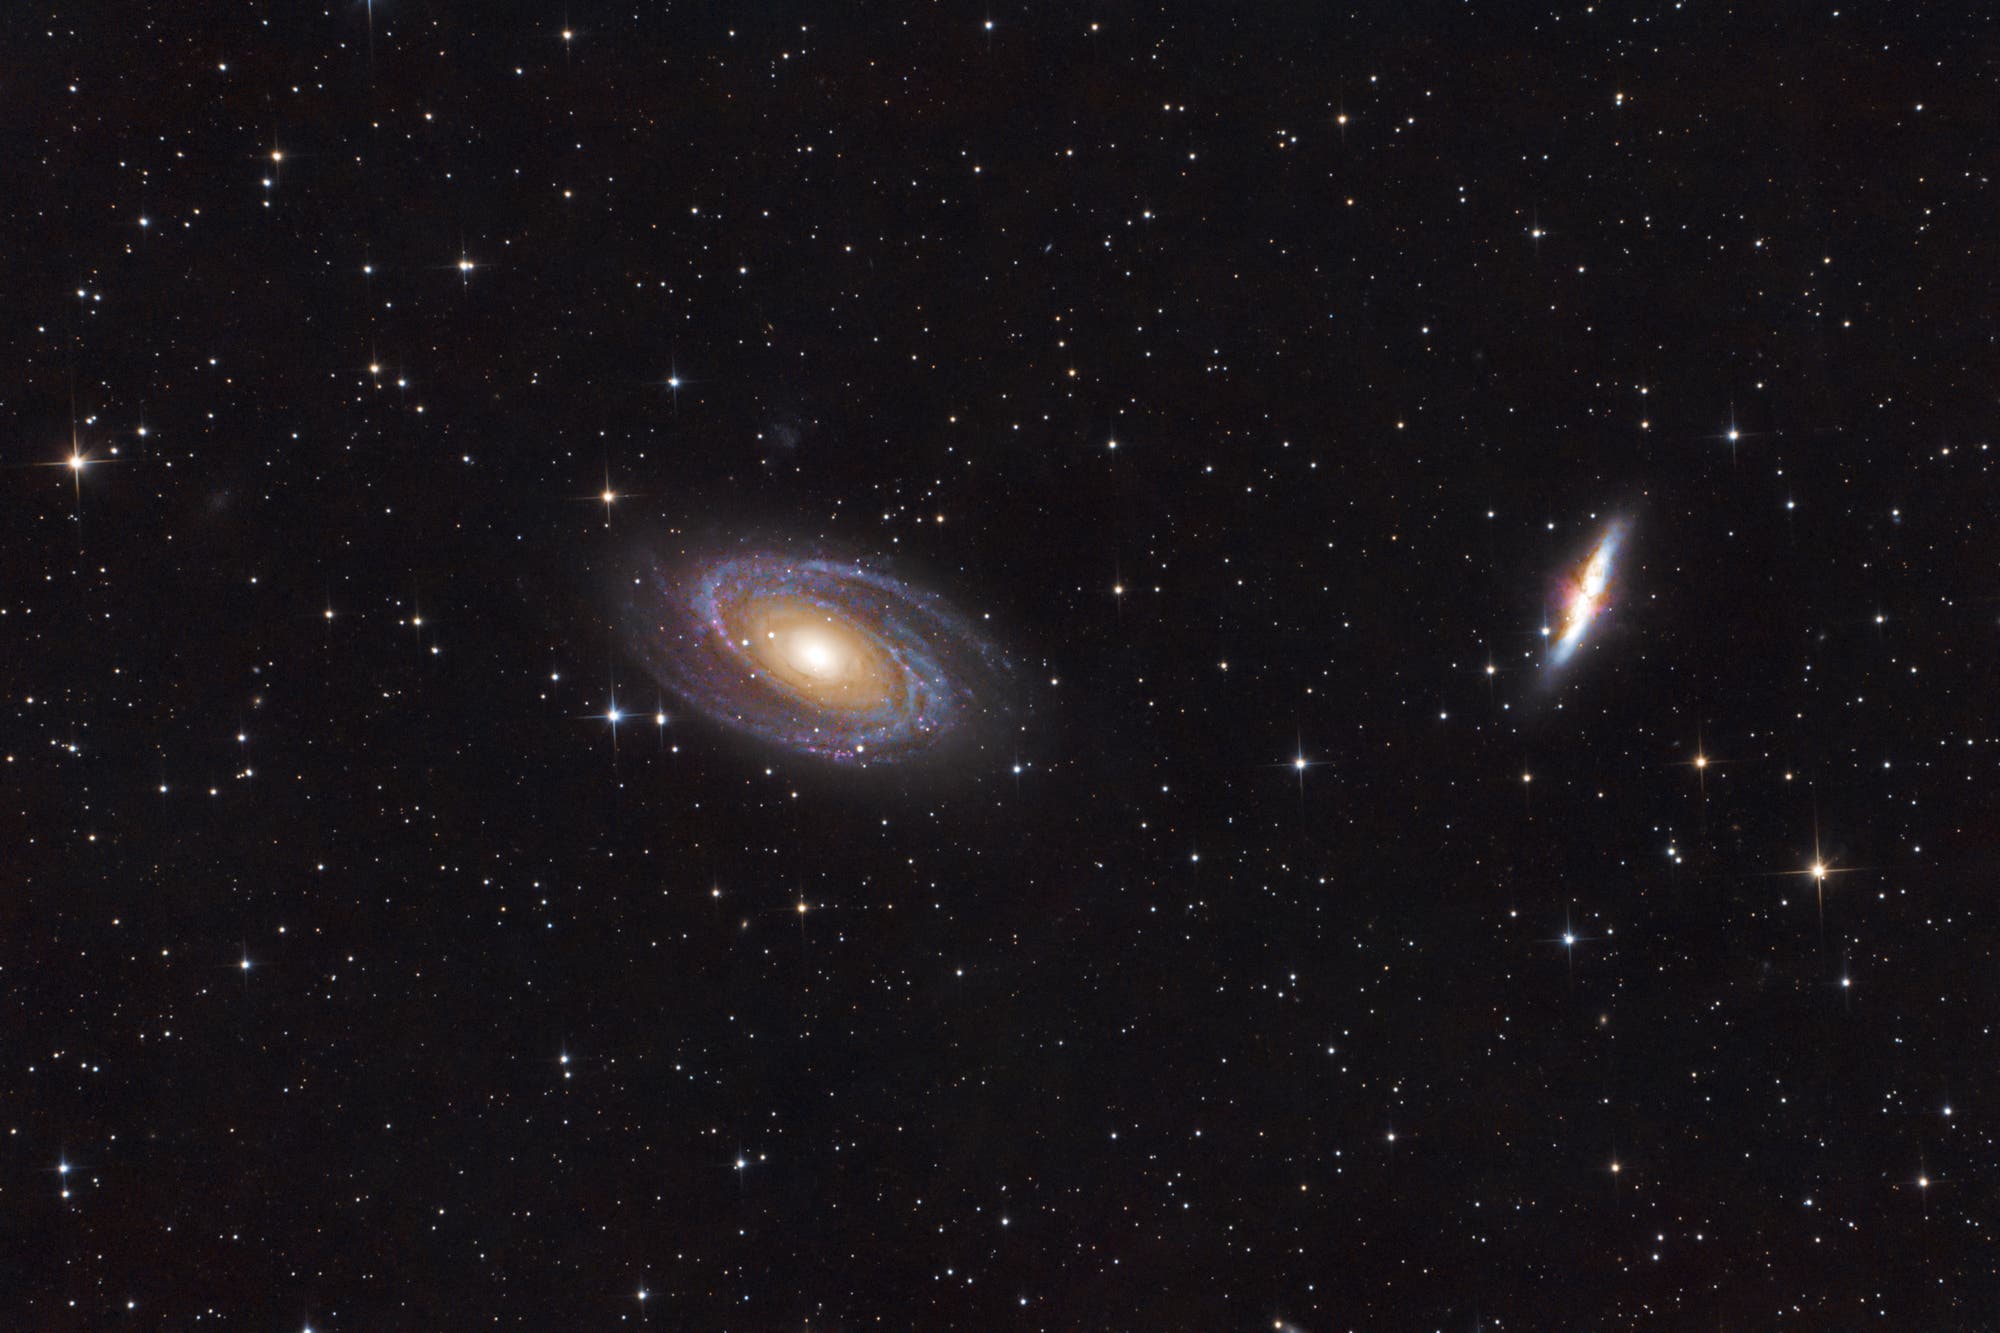 Messier 81 - Bodes Galaxie / Messier 82 - Zigarrengalaxie